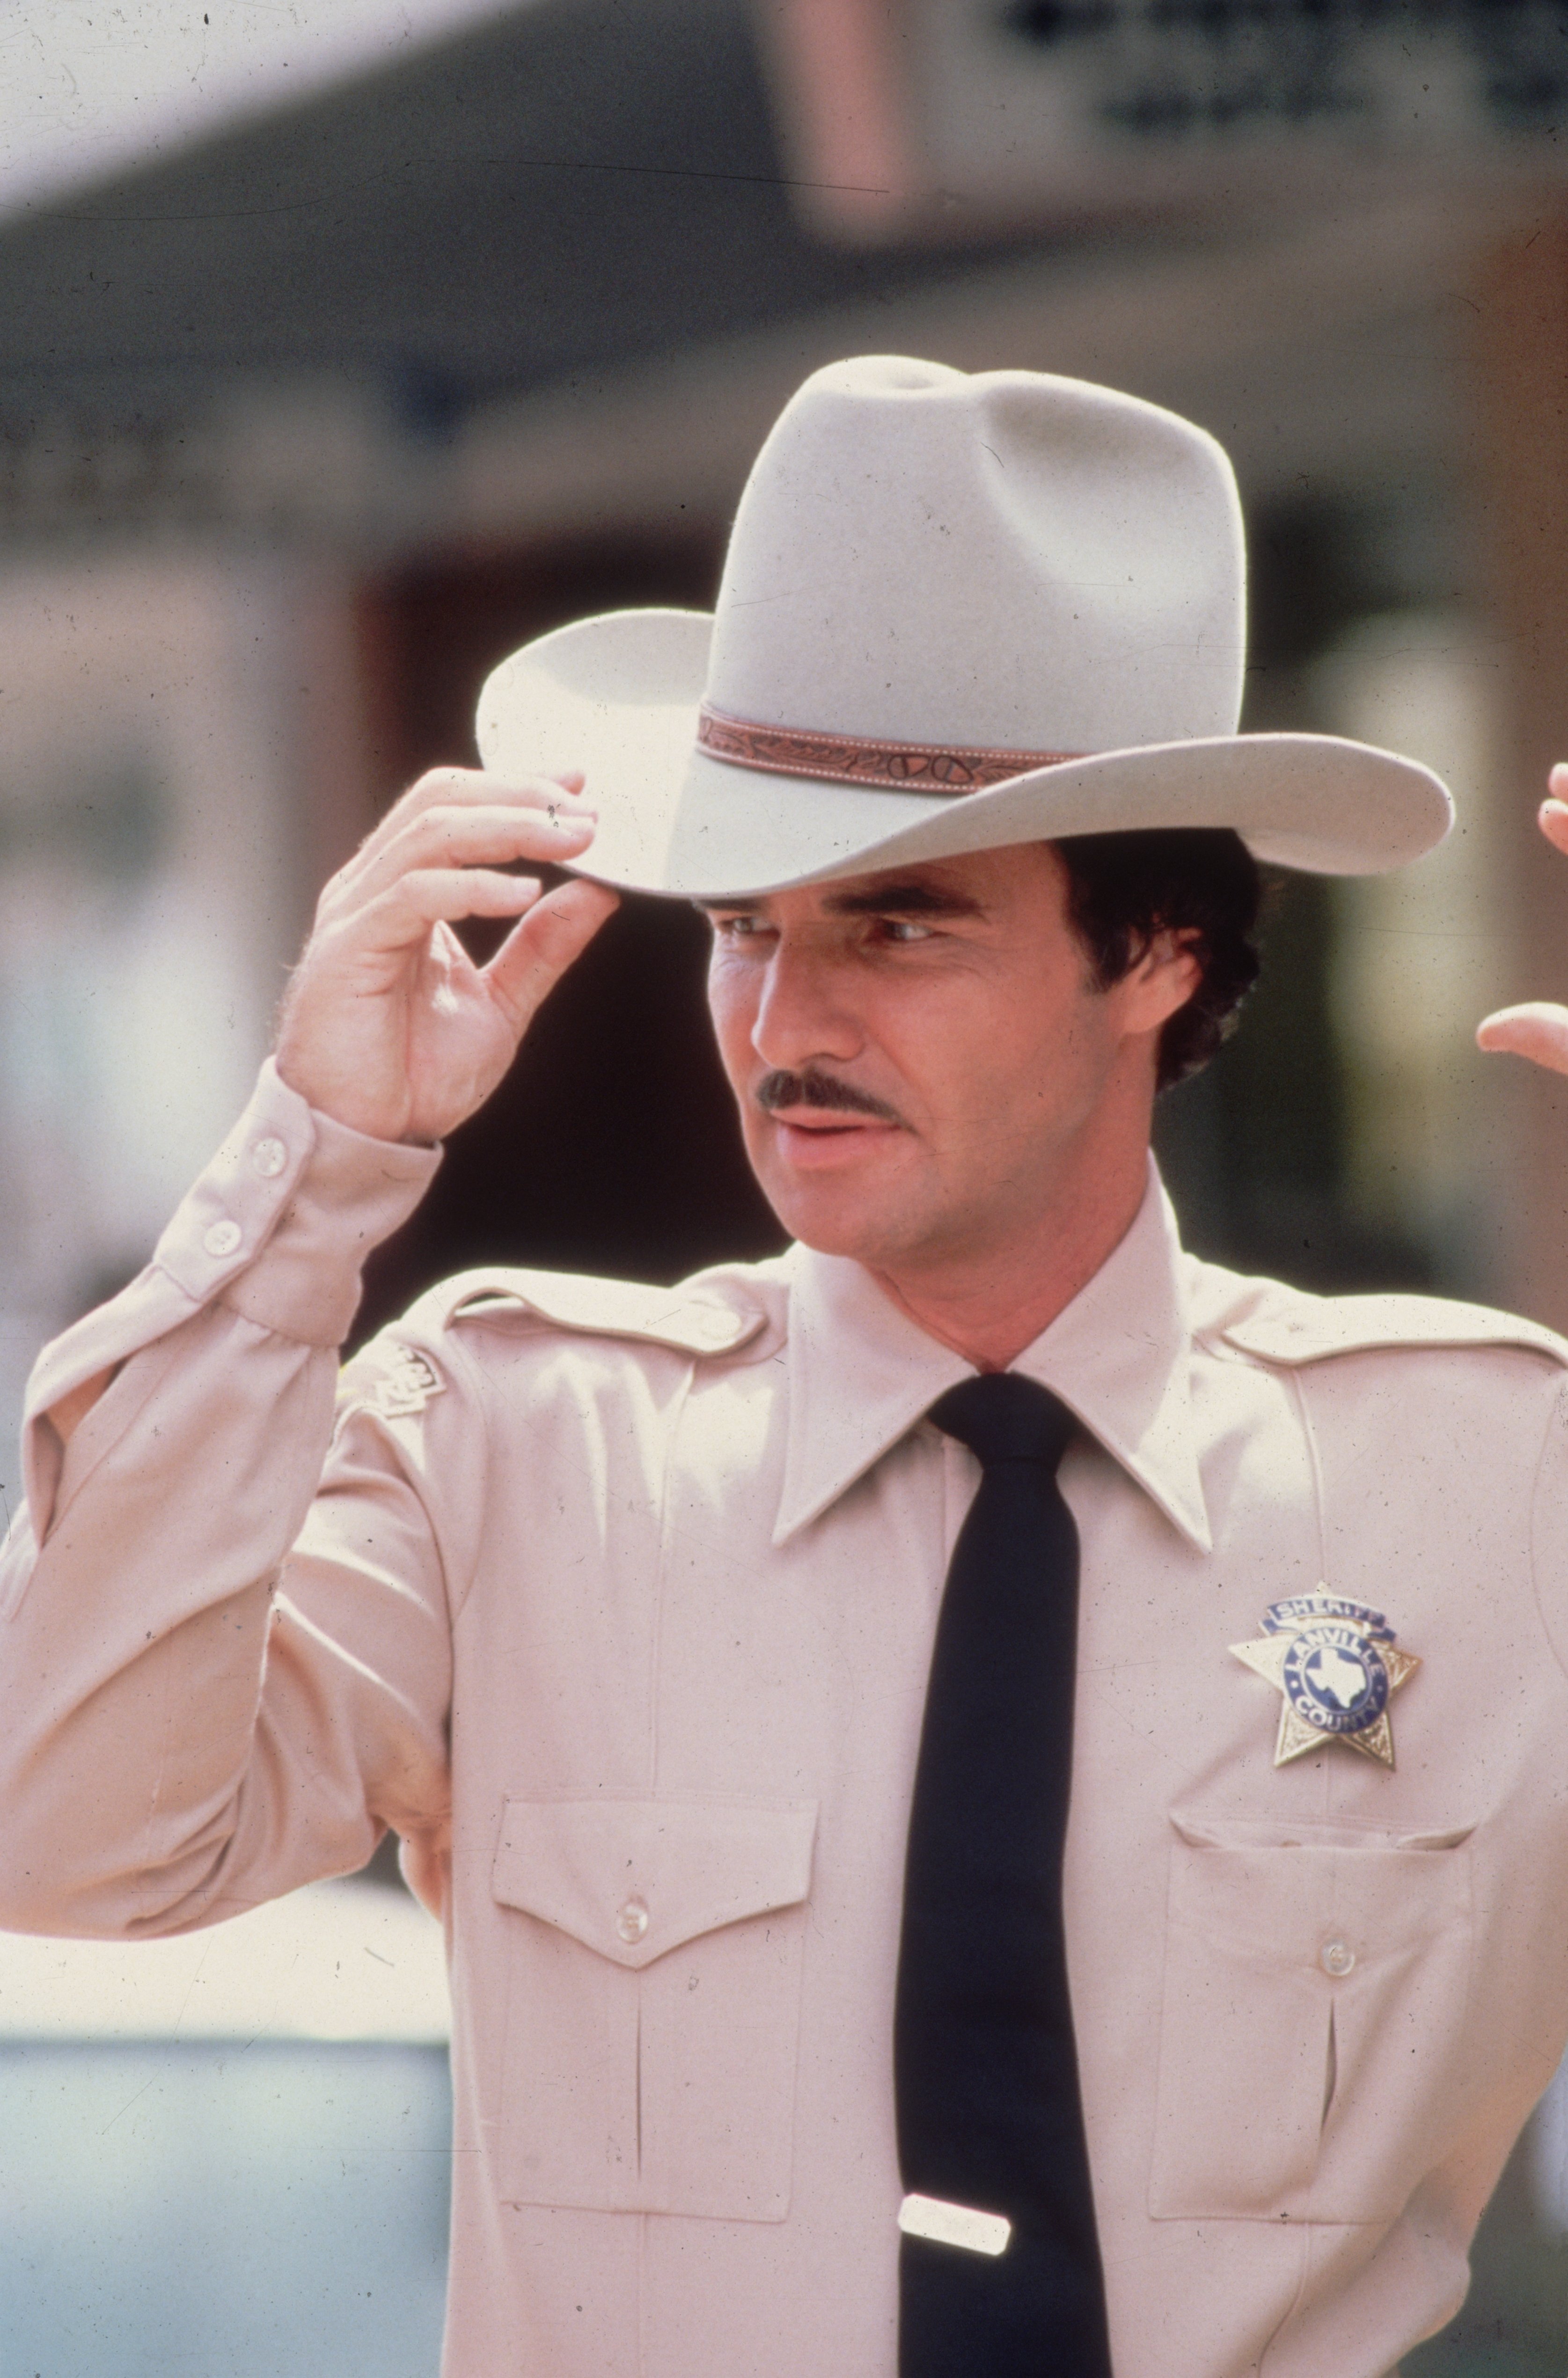 Burt Reynolds dressed as a sheriff circa 1985. | Source: Getty Images